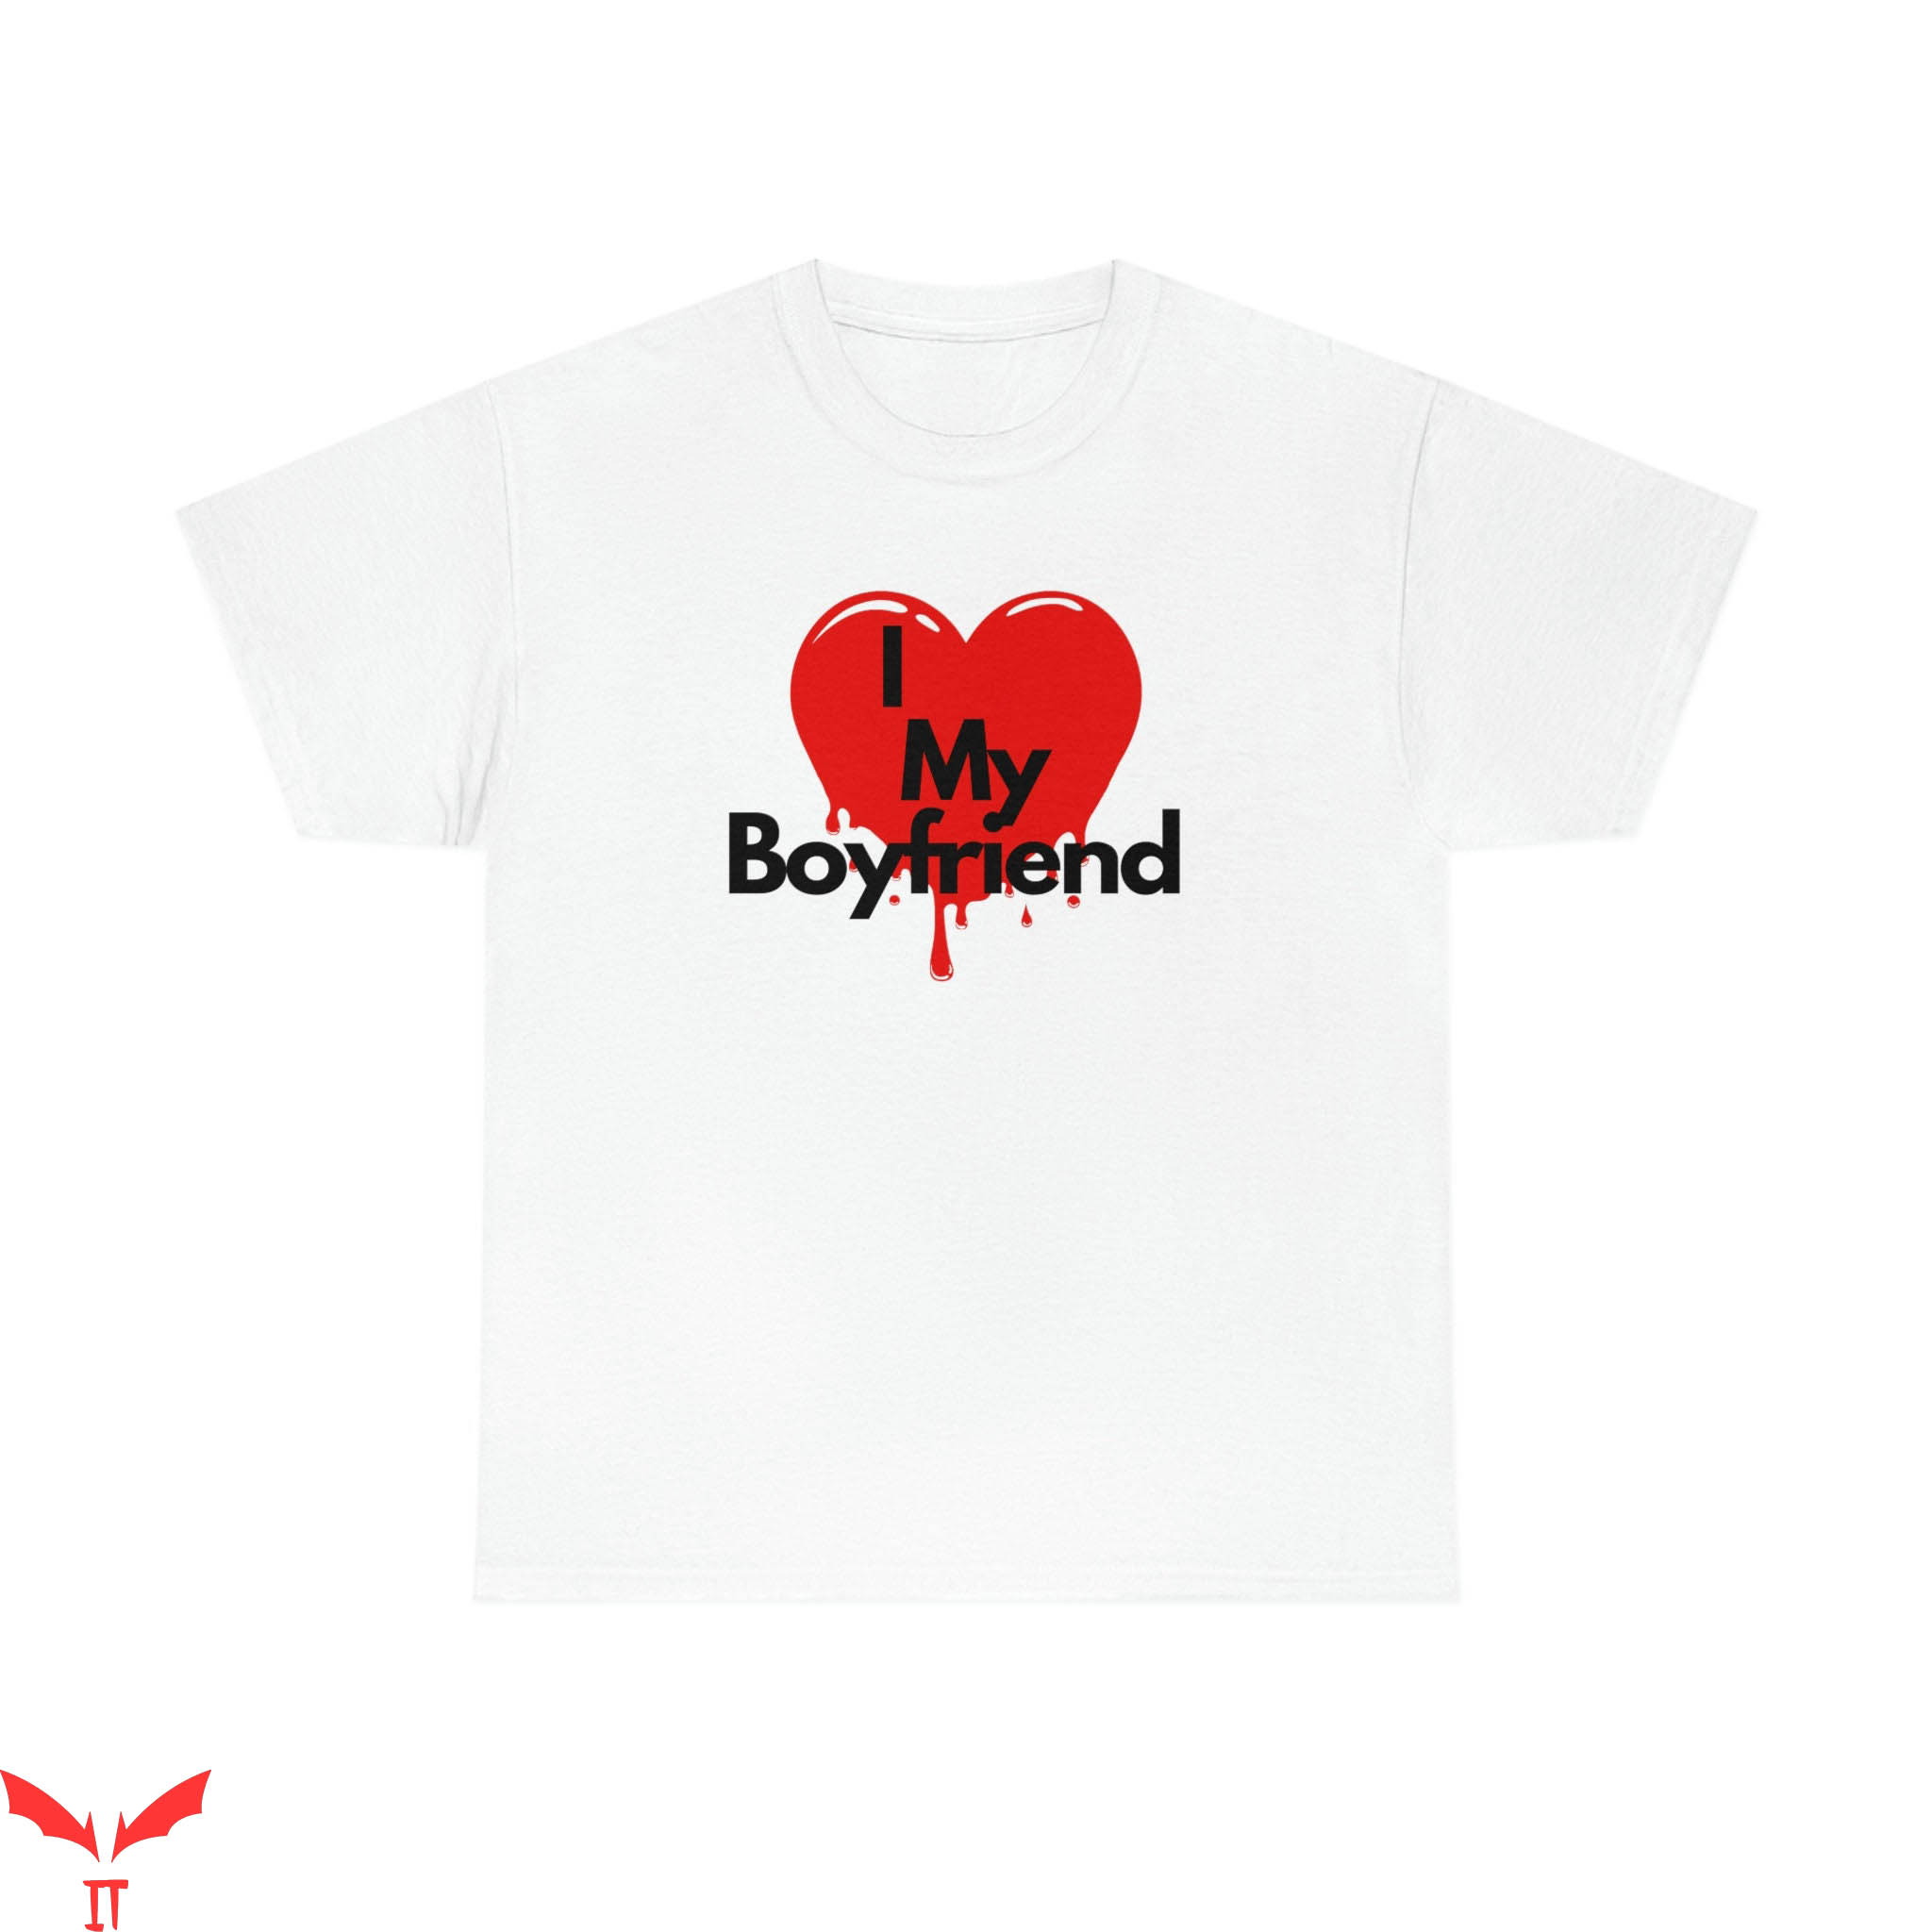 I Love My Boyfriend T-Shirt Couple Valentines Day Tee